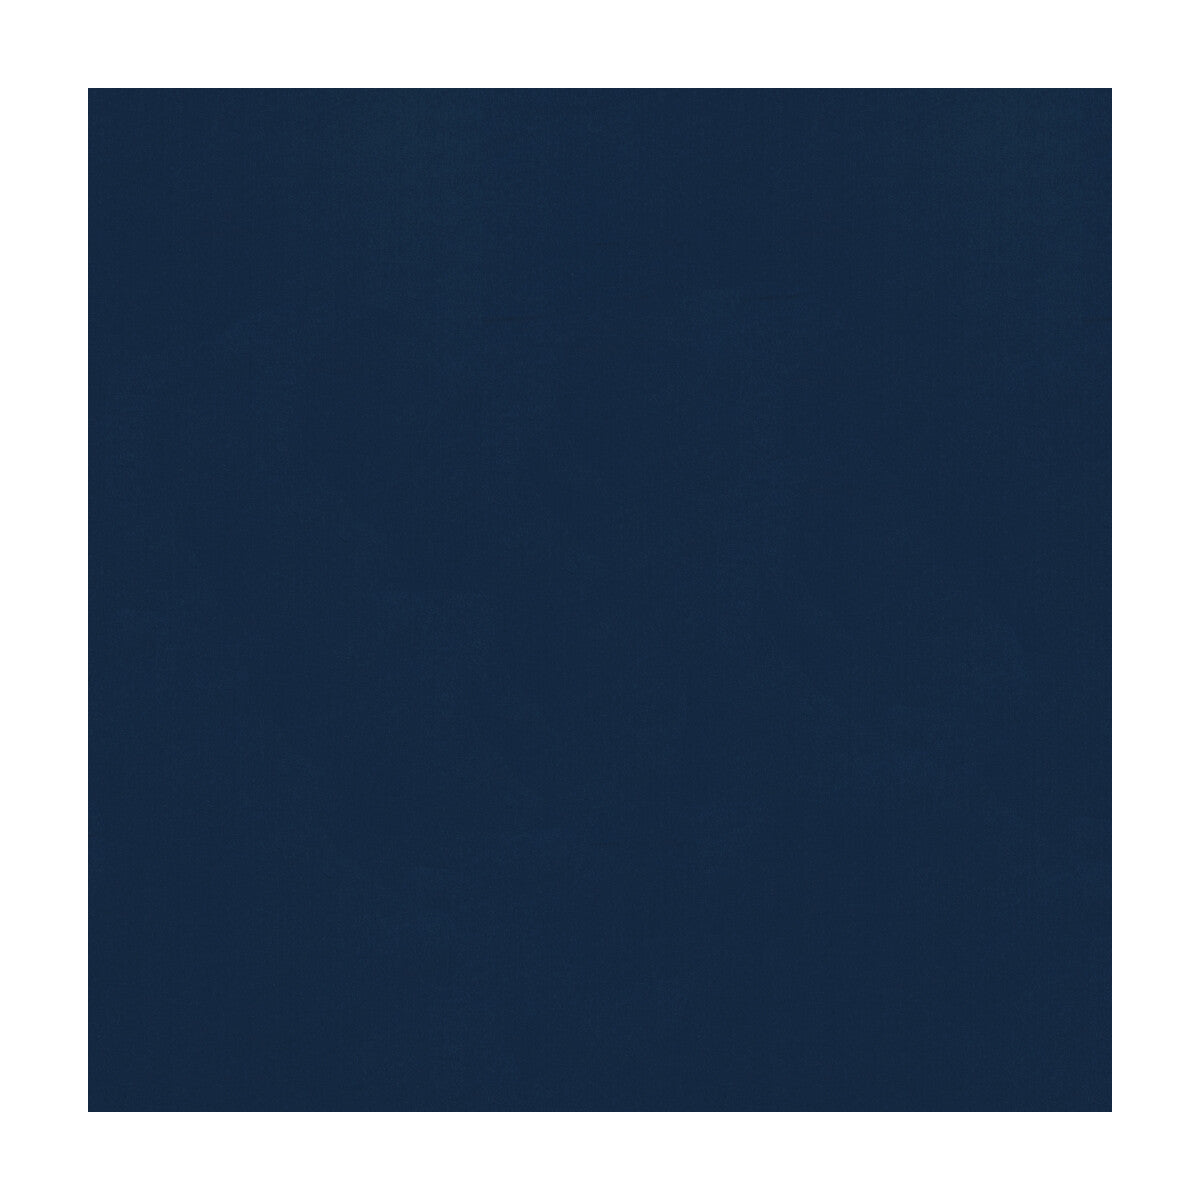 Ninon Taffetas fabric in midnight blue color - pattern BR-81081.287.0 - by Brunschwig &amp; Fils